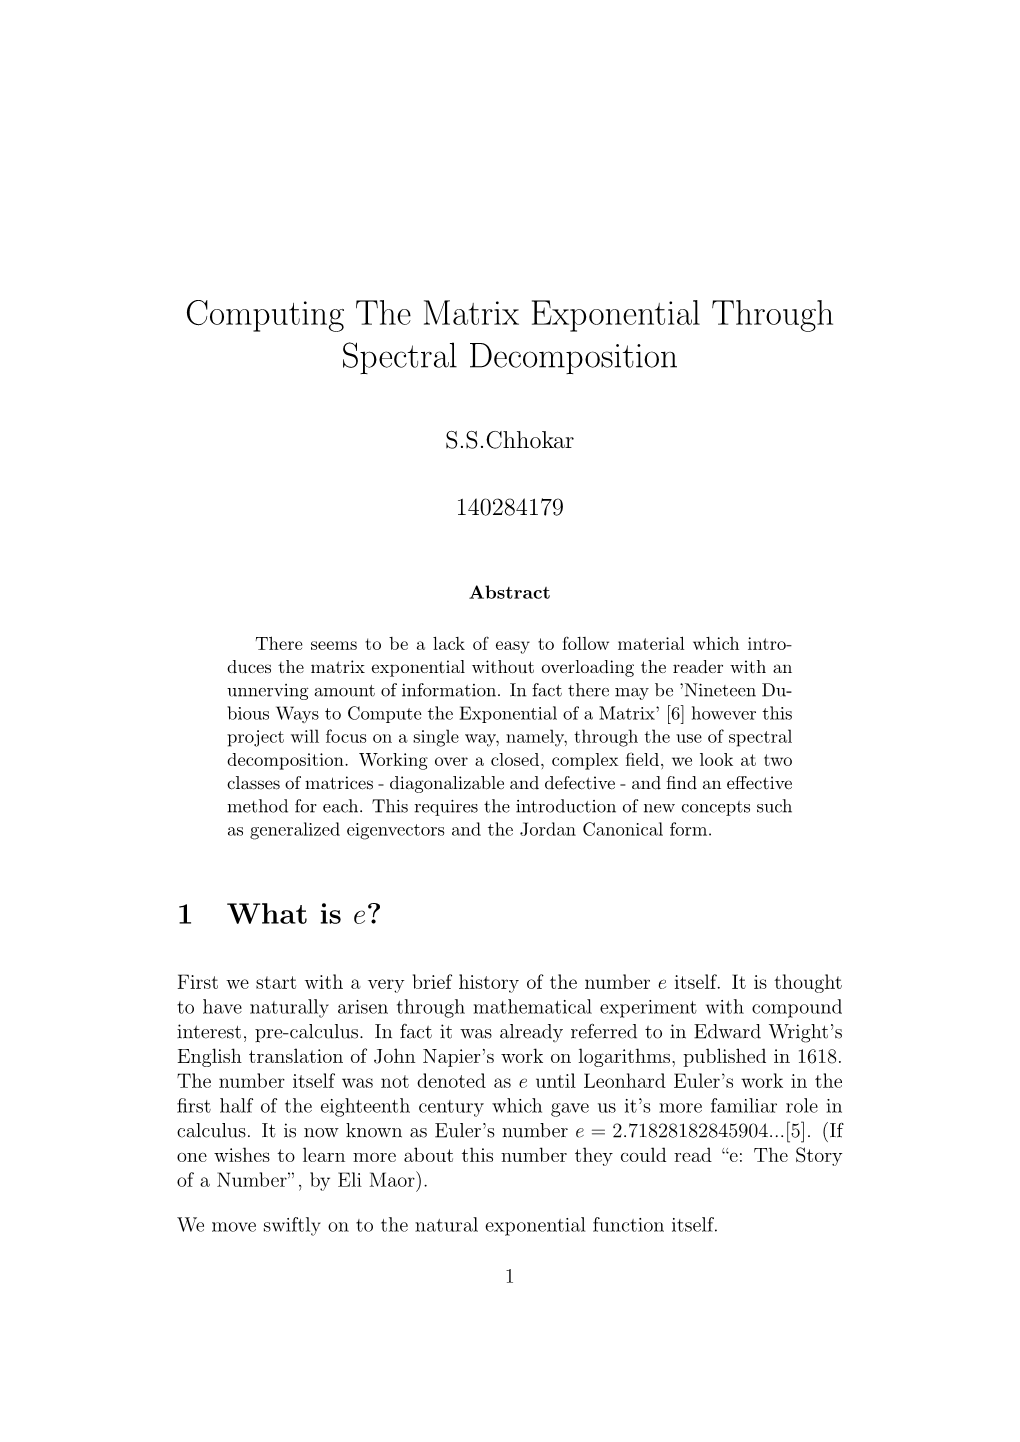 Computing the Matrix Exponential Through Spectral Decomposition